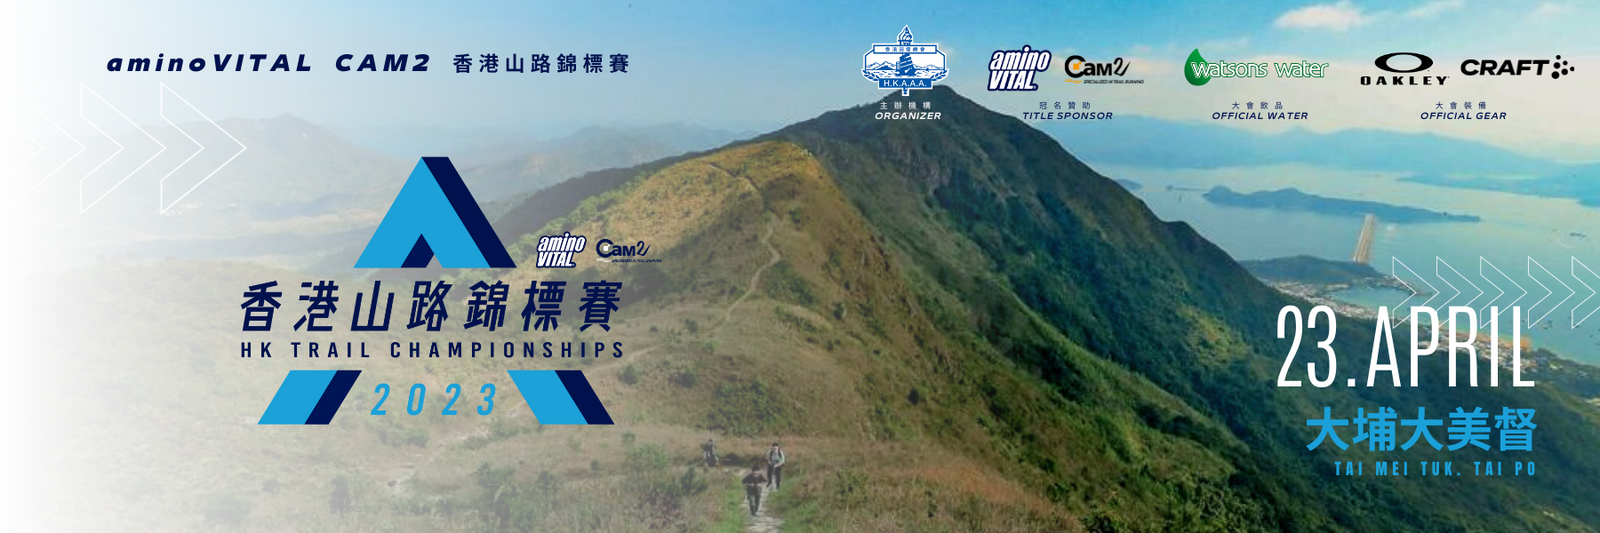 aminoVITAL CAM2 香港山路錦標賽2023 路線攻略